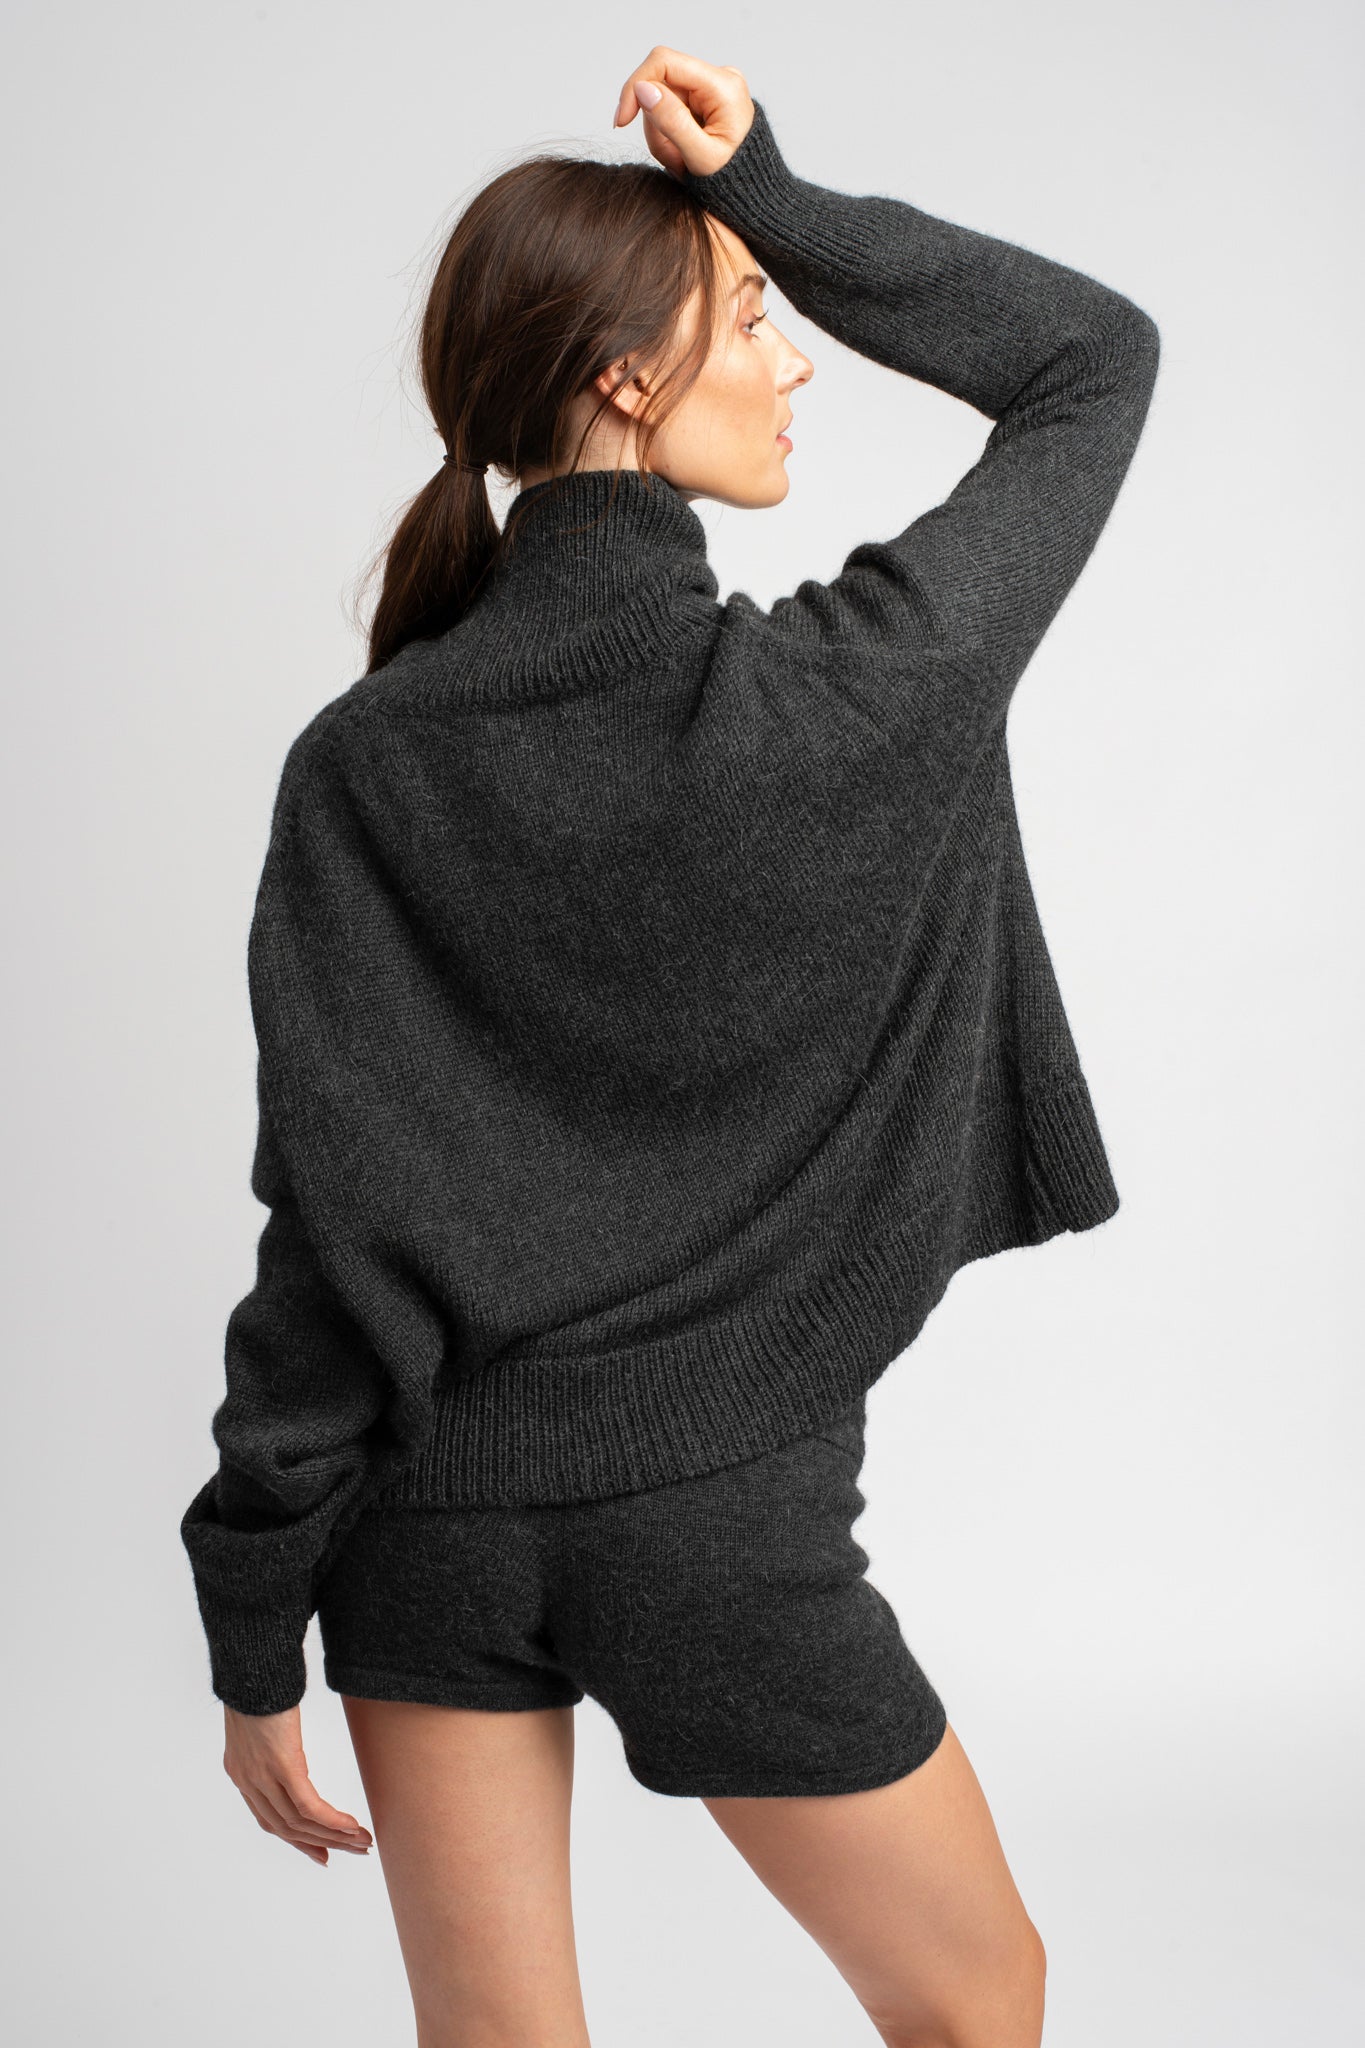 Model wearing knitwear alpaca wool dark grey shorts with matching sweater, back